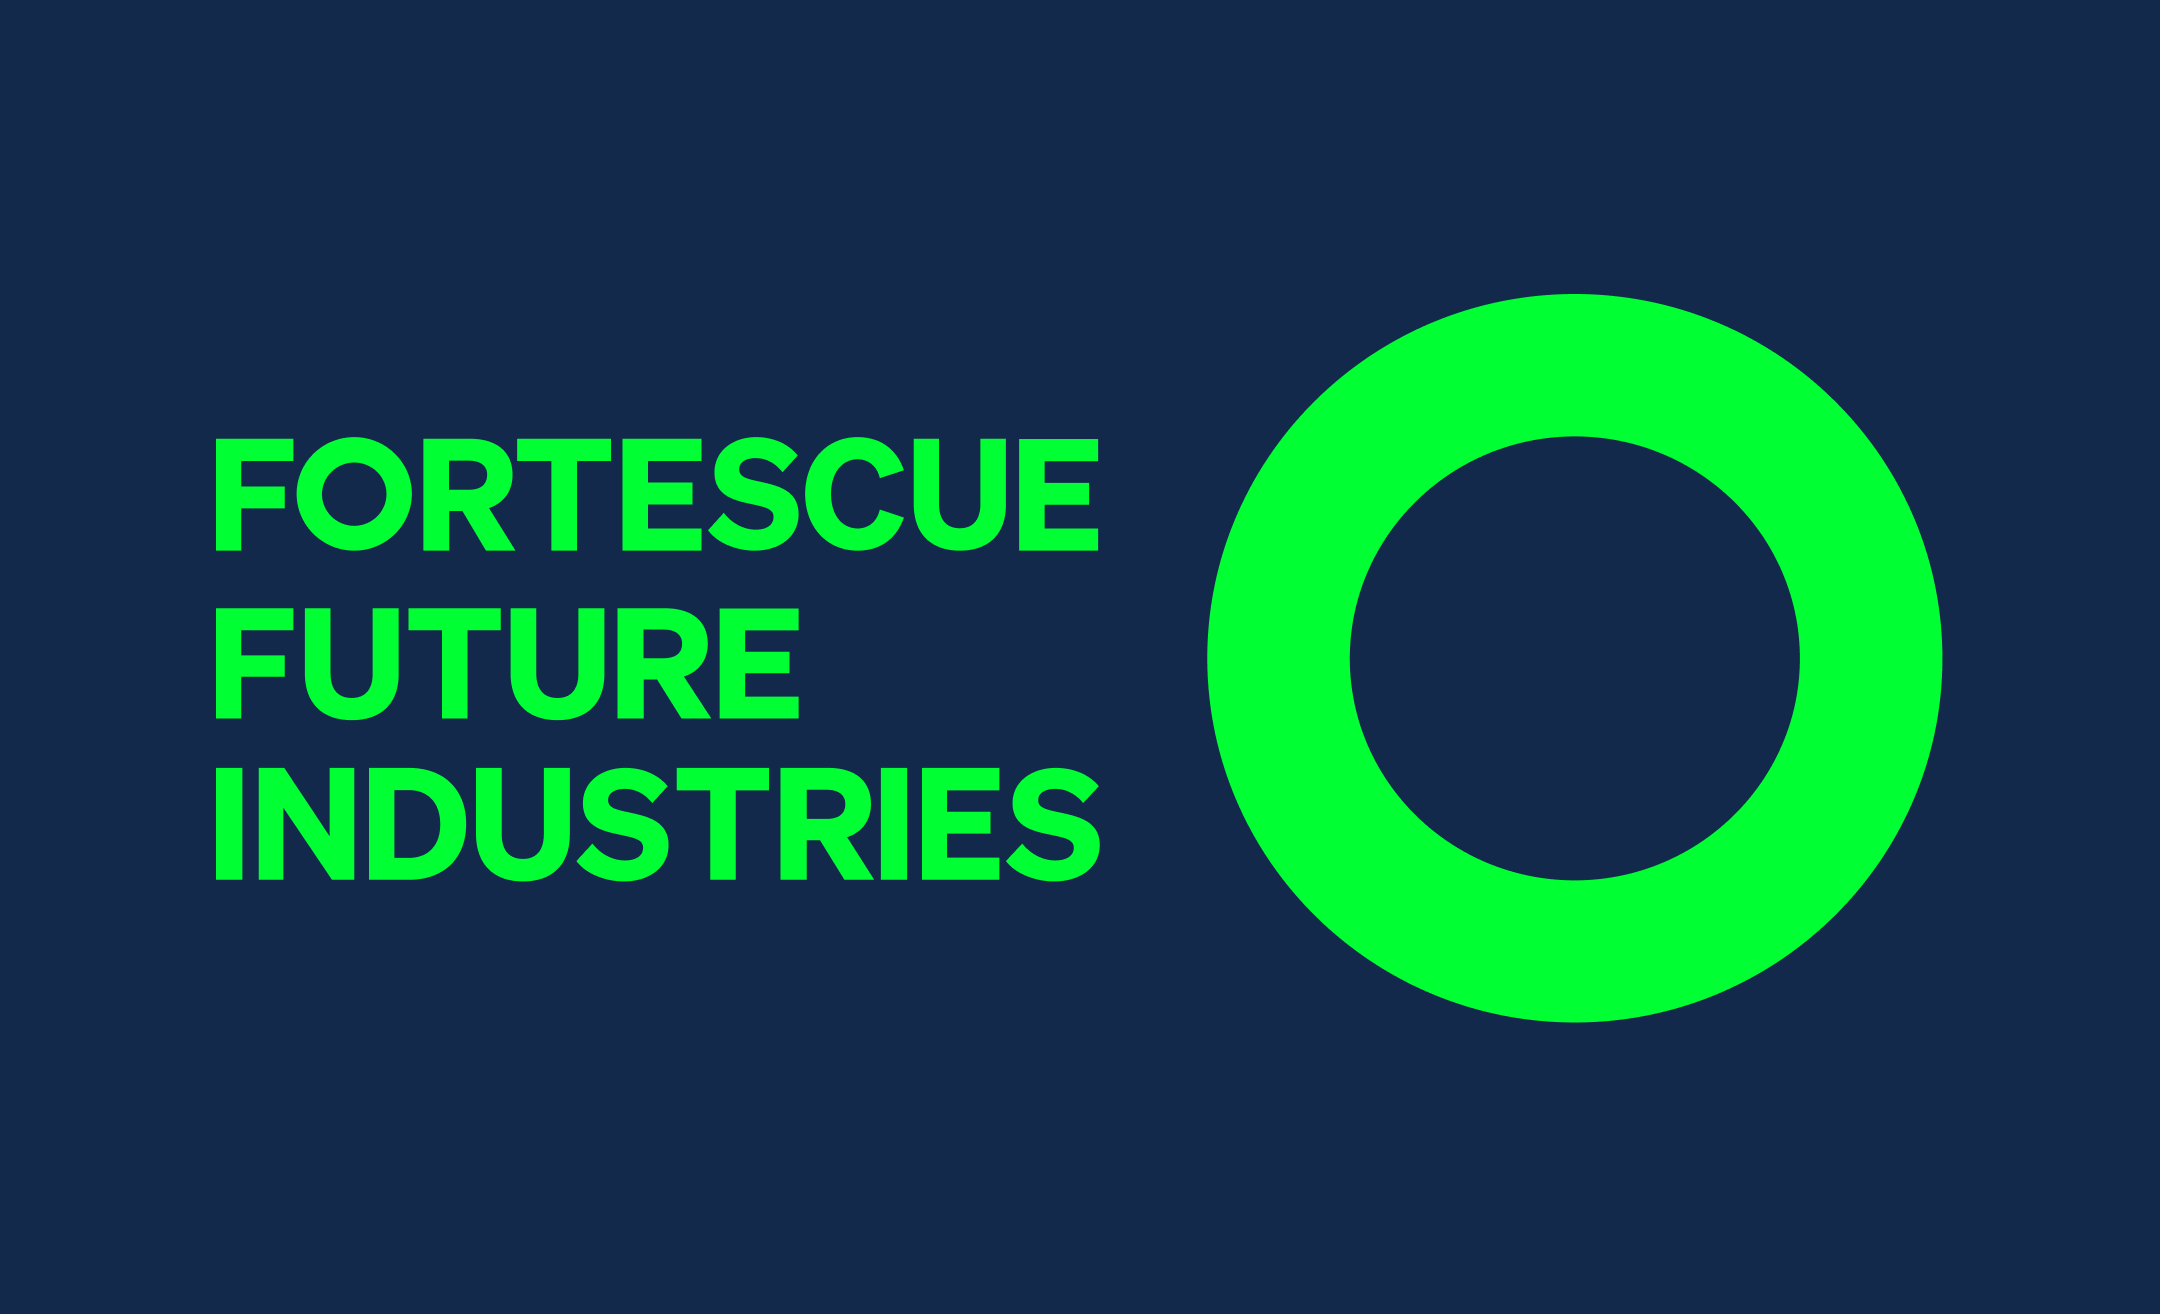 Fortescue Future Industries (FFI) flag